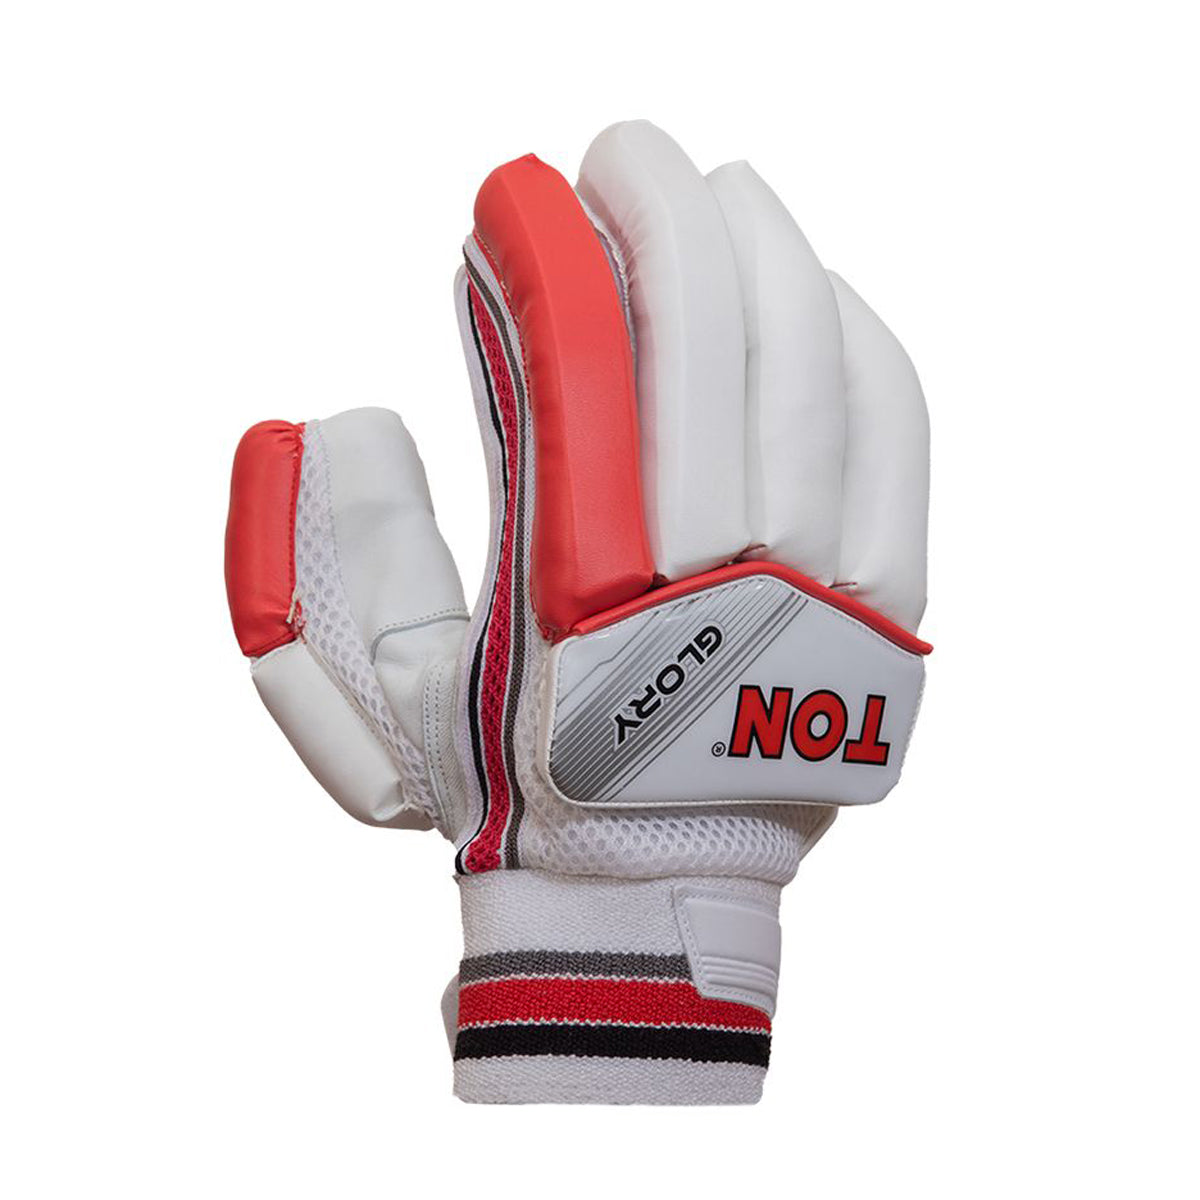 SS Ton Glory RH Cricket Batting Gloves - Best Price online Prokicksports.com